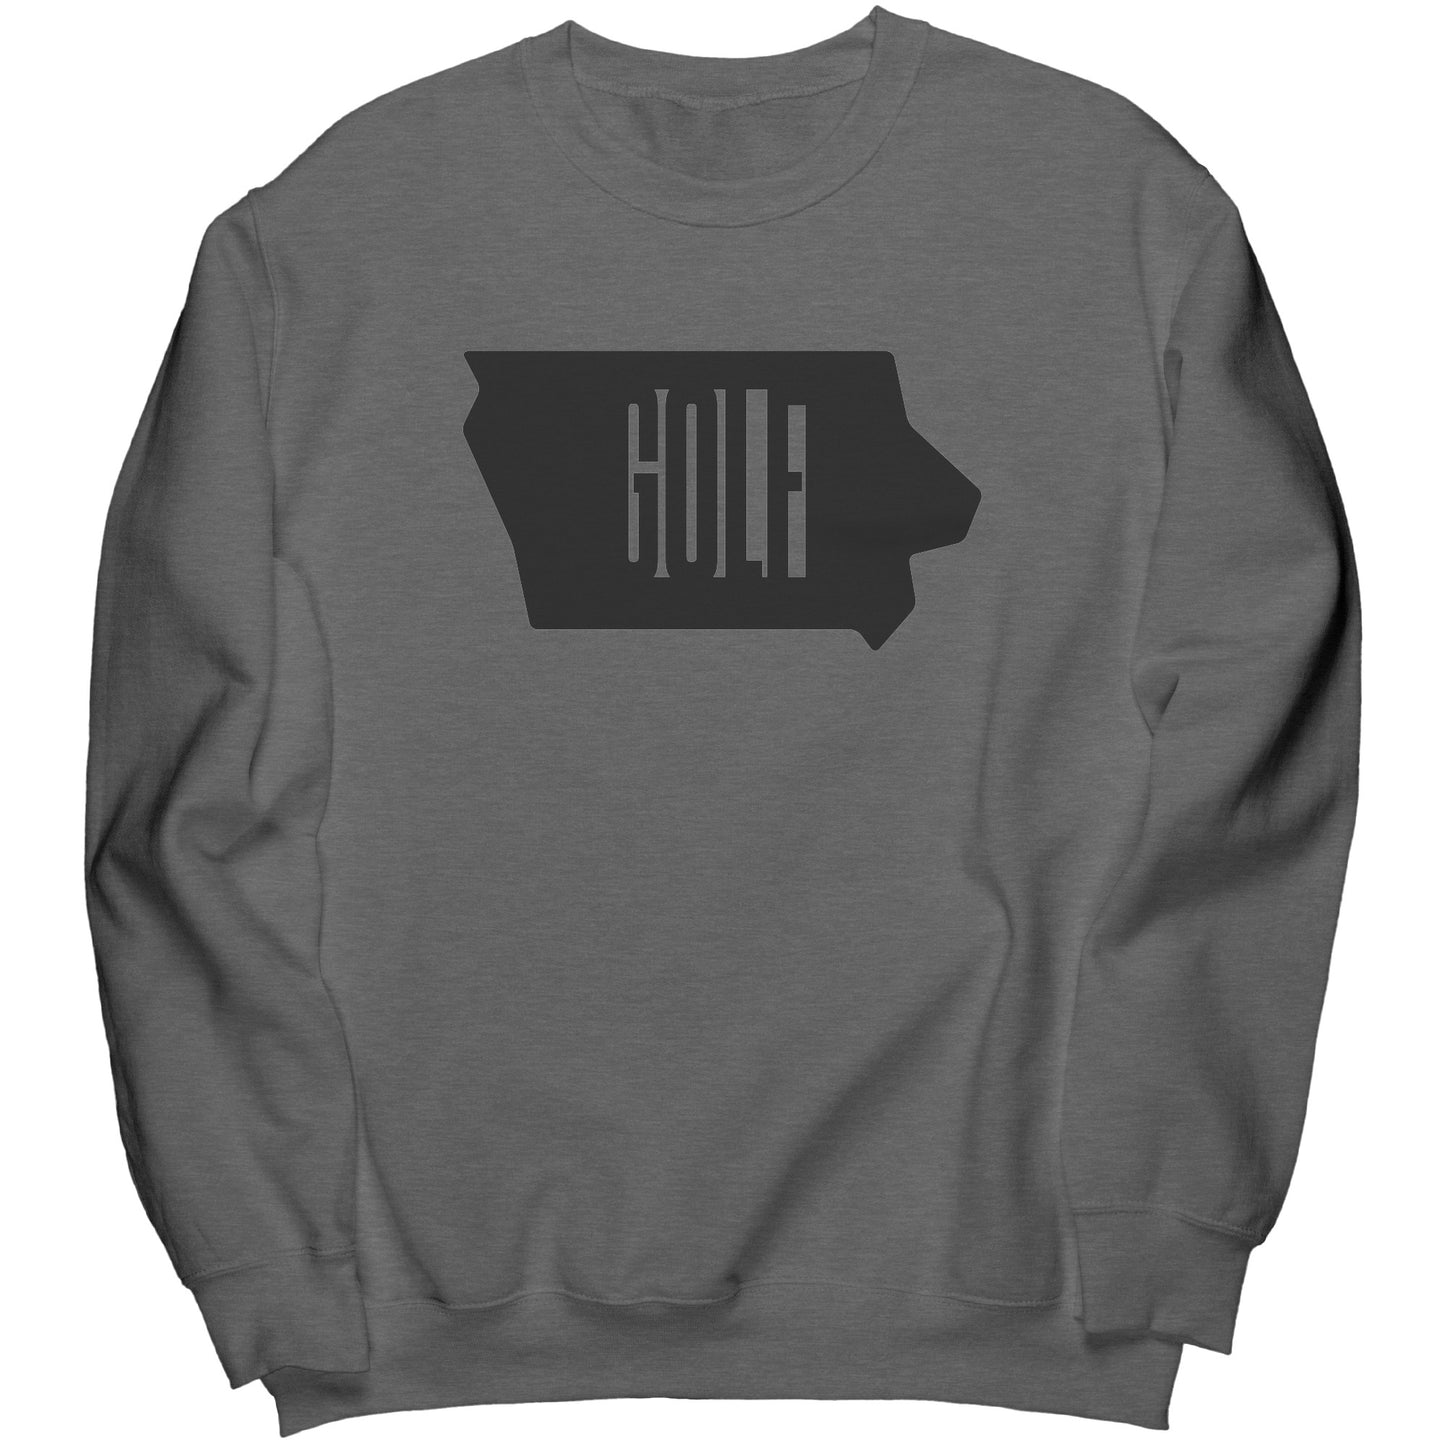 Iowa "Golf" Sweatshirt